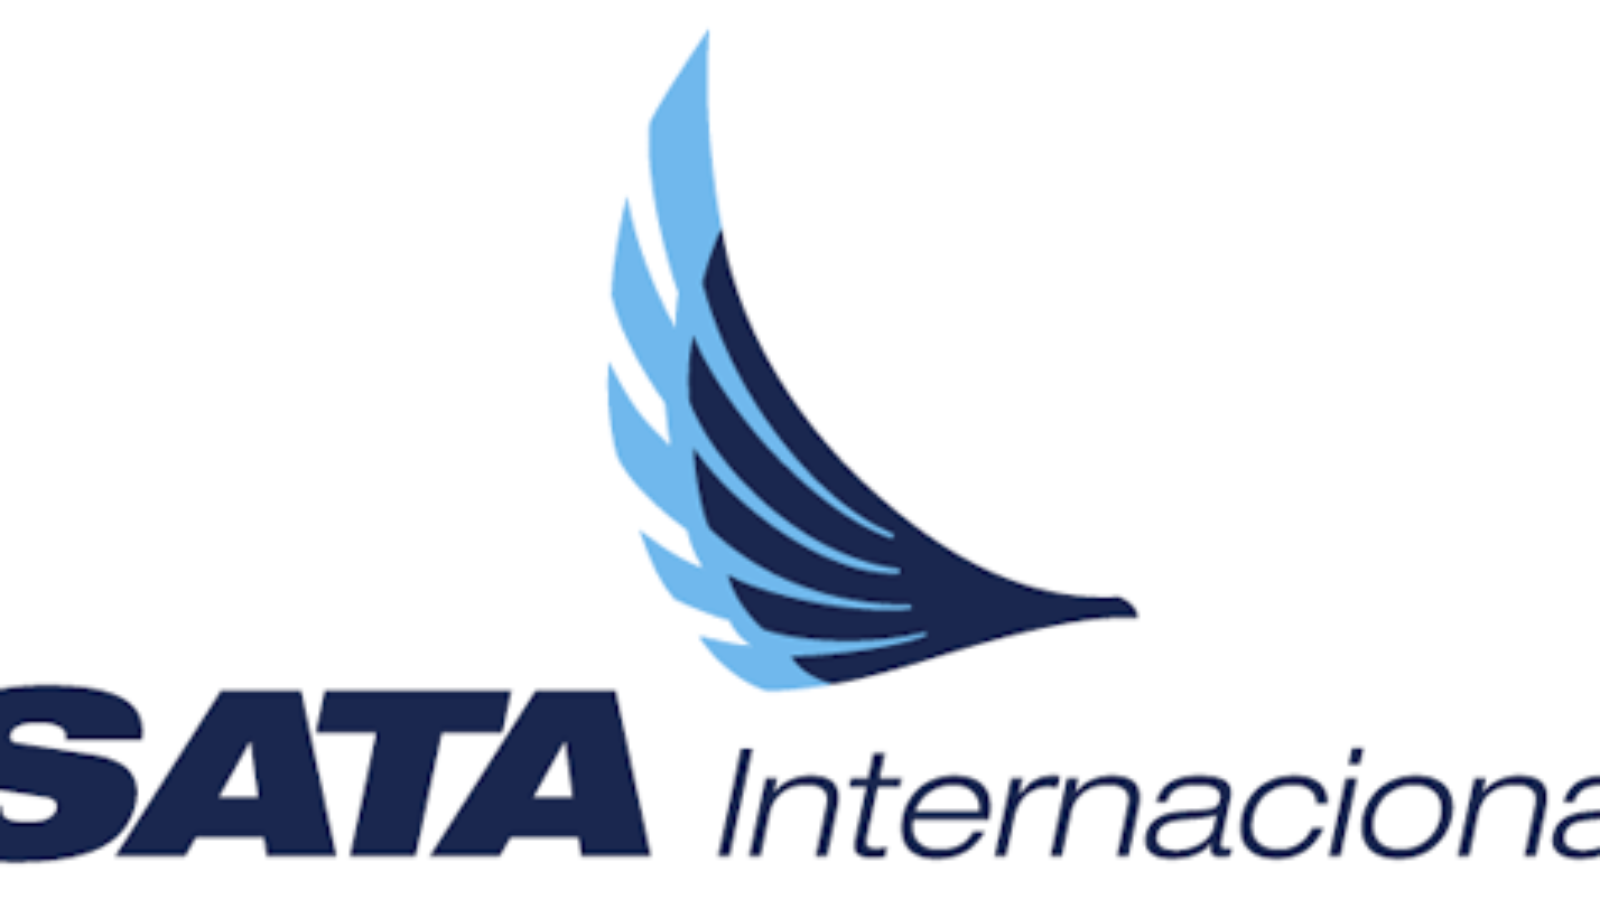 SATA Inter Logo